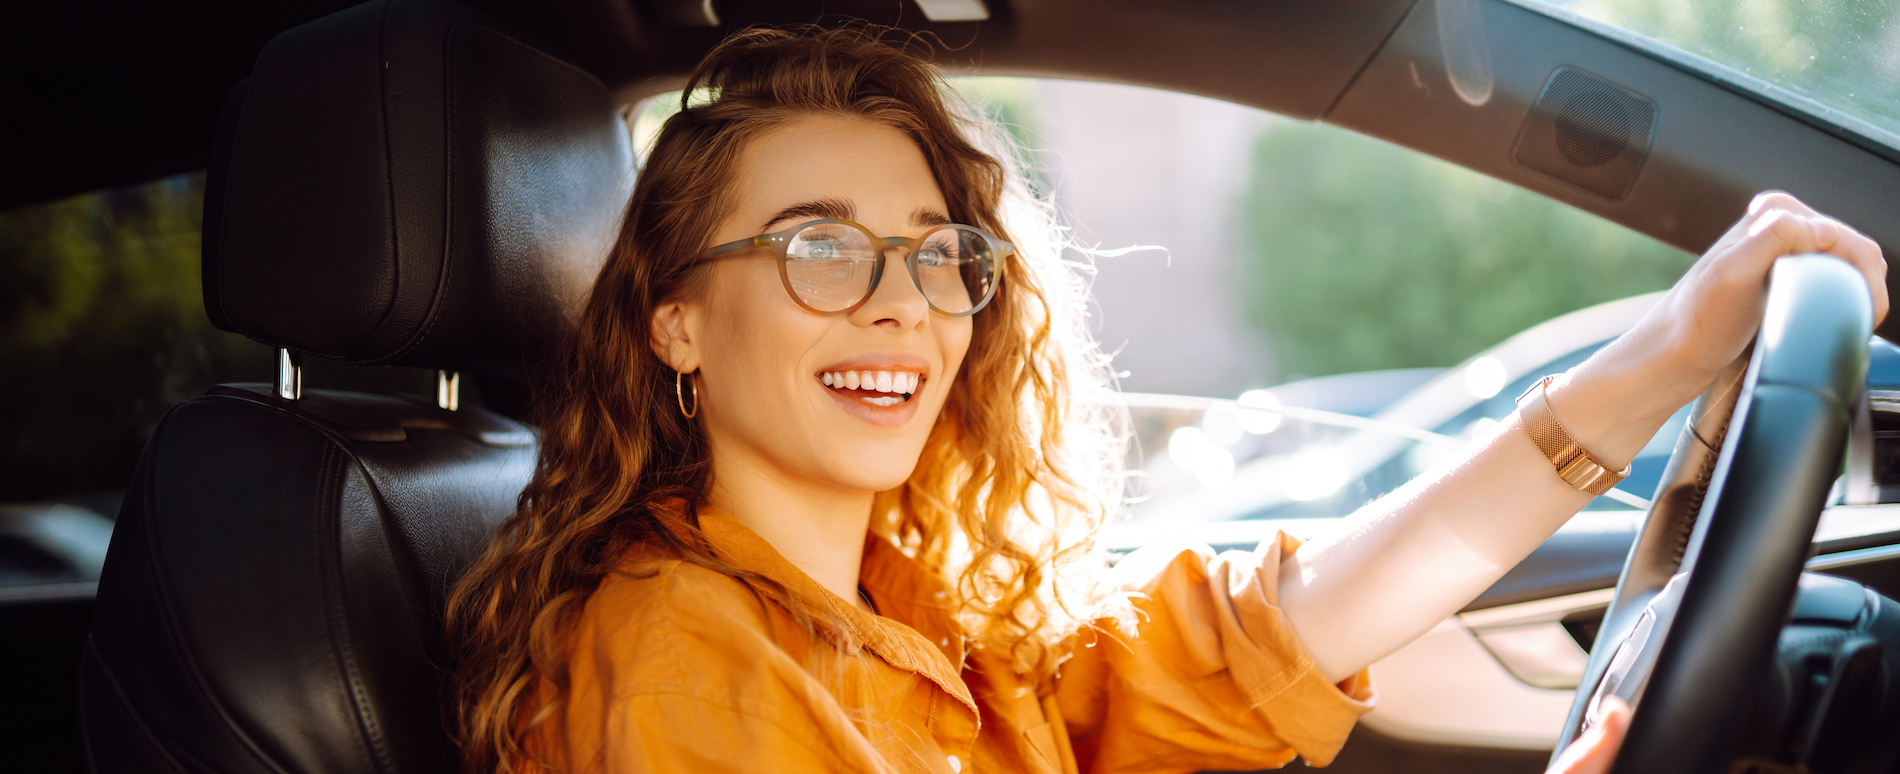 Vehicle insurance - woman driving new car